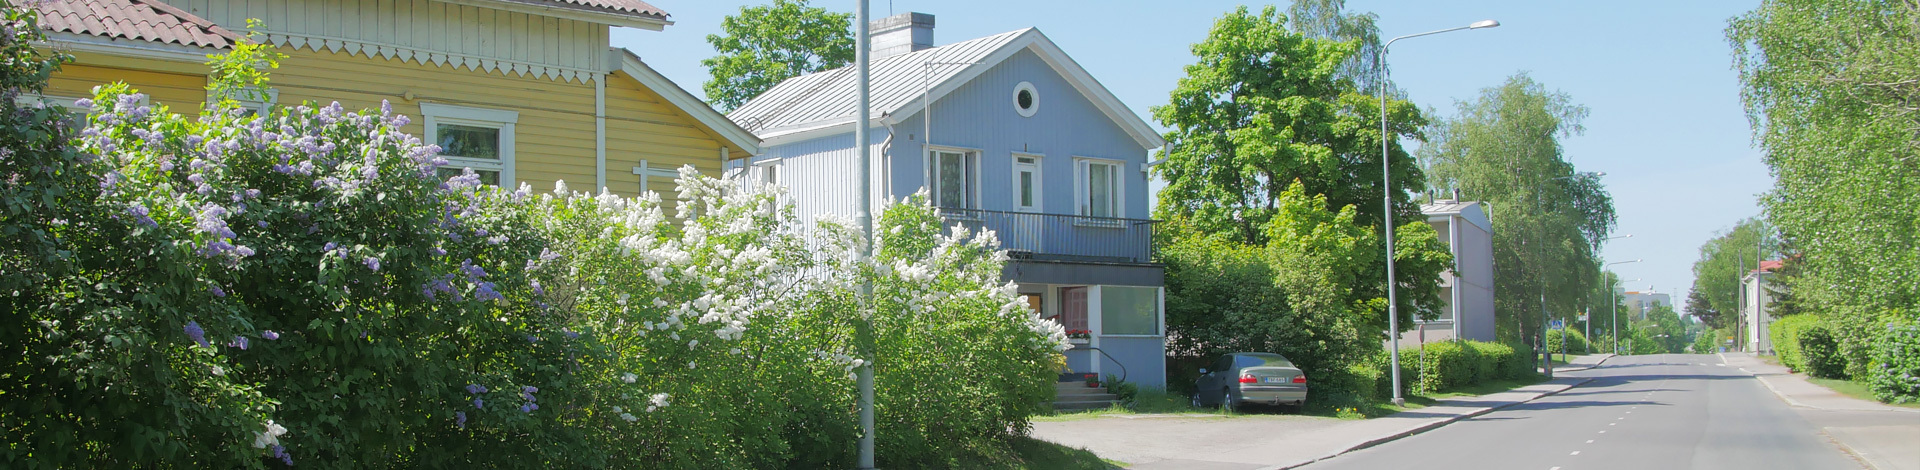 View of Hakametsä, Tampere